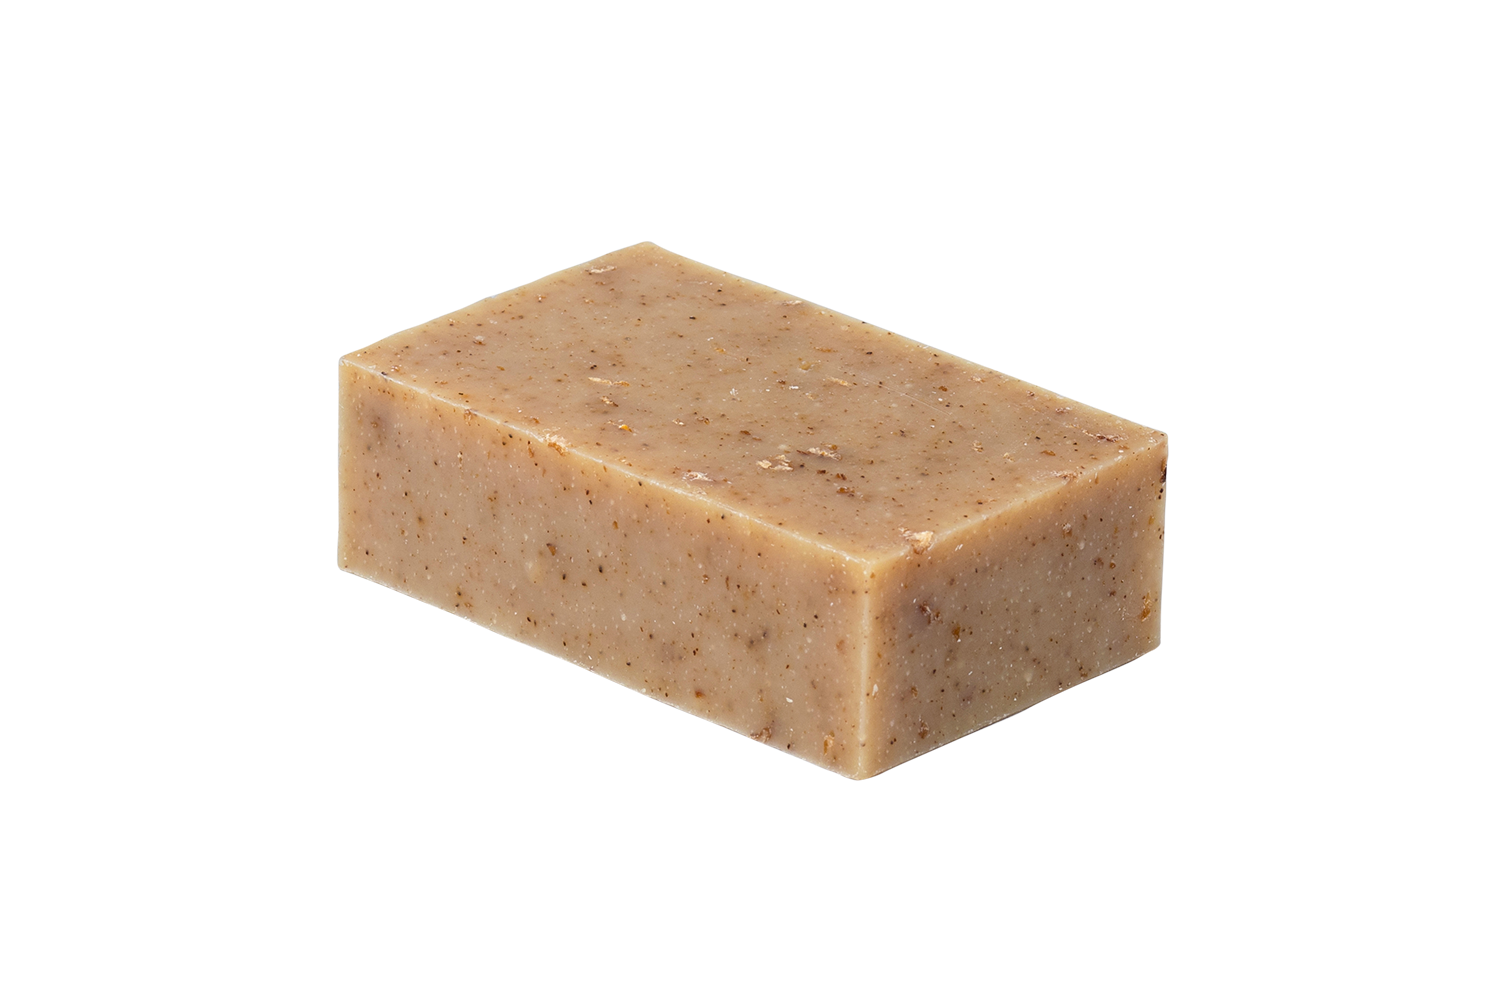 4 oz of oatmeal spice soap